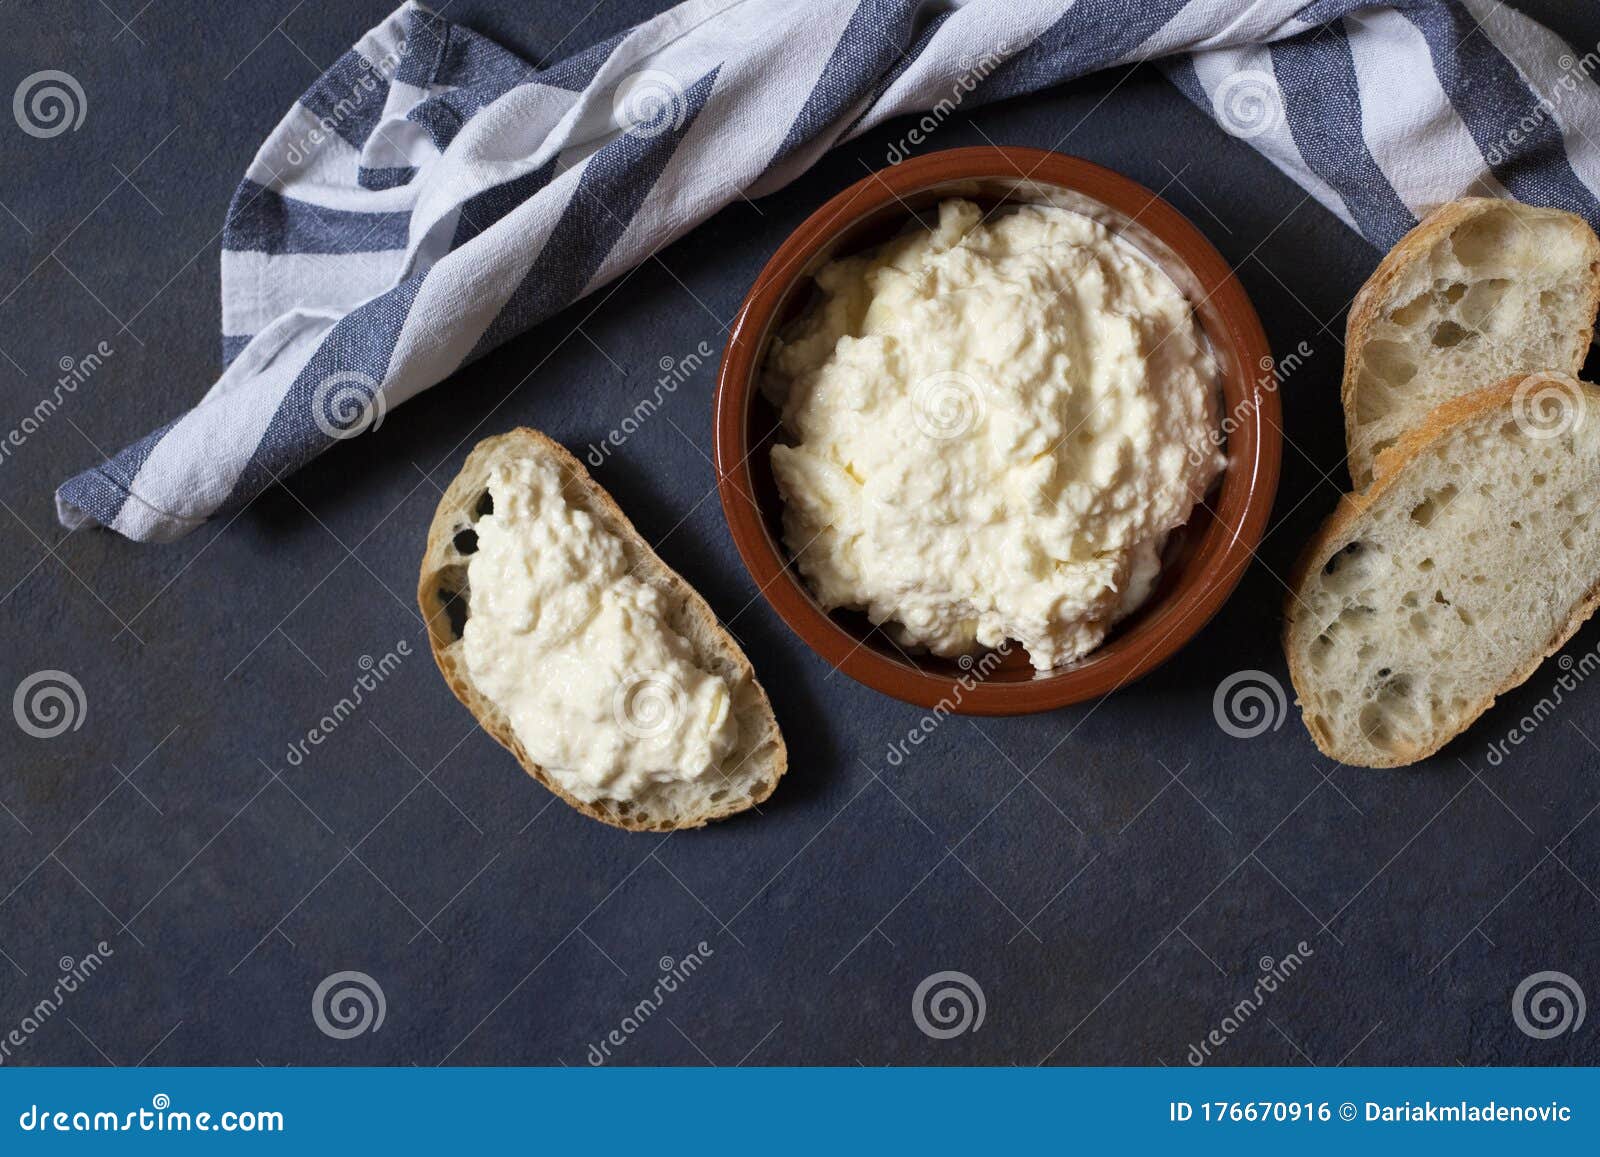 kajmak or kaymak. traditional homemade white cheese. sandwich with kajmak. balkan cuisine. serbian cuisine